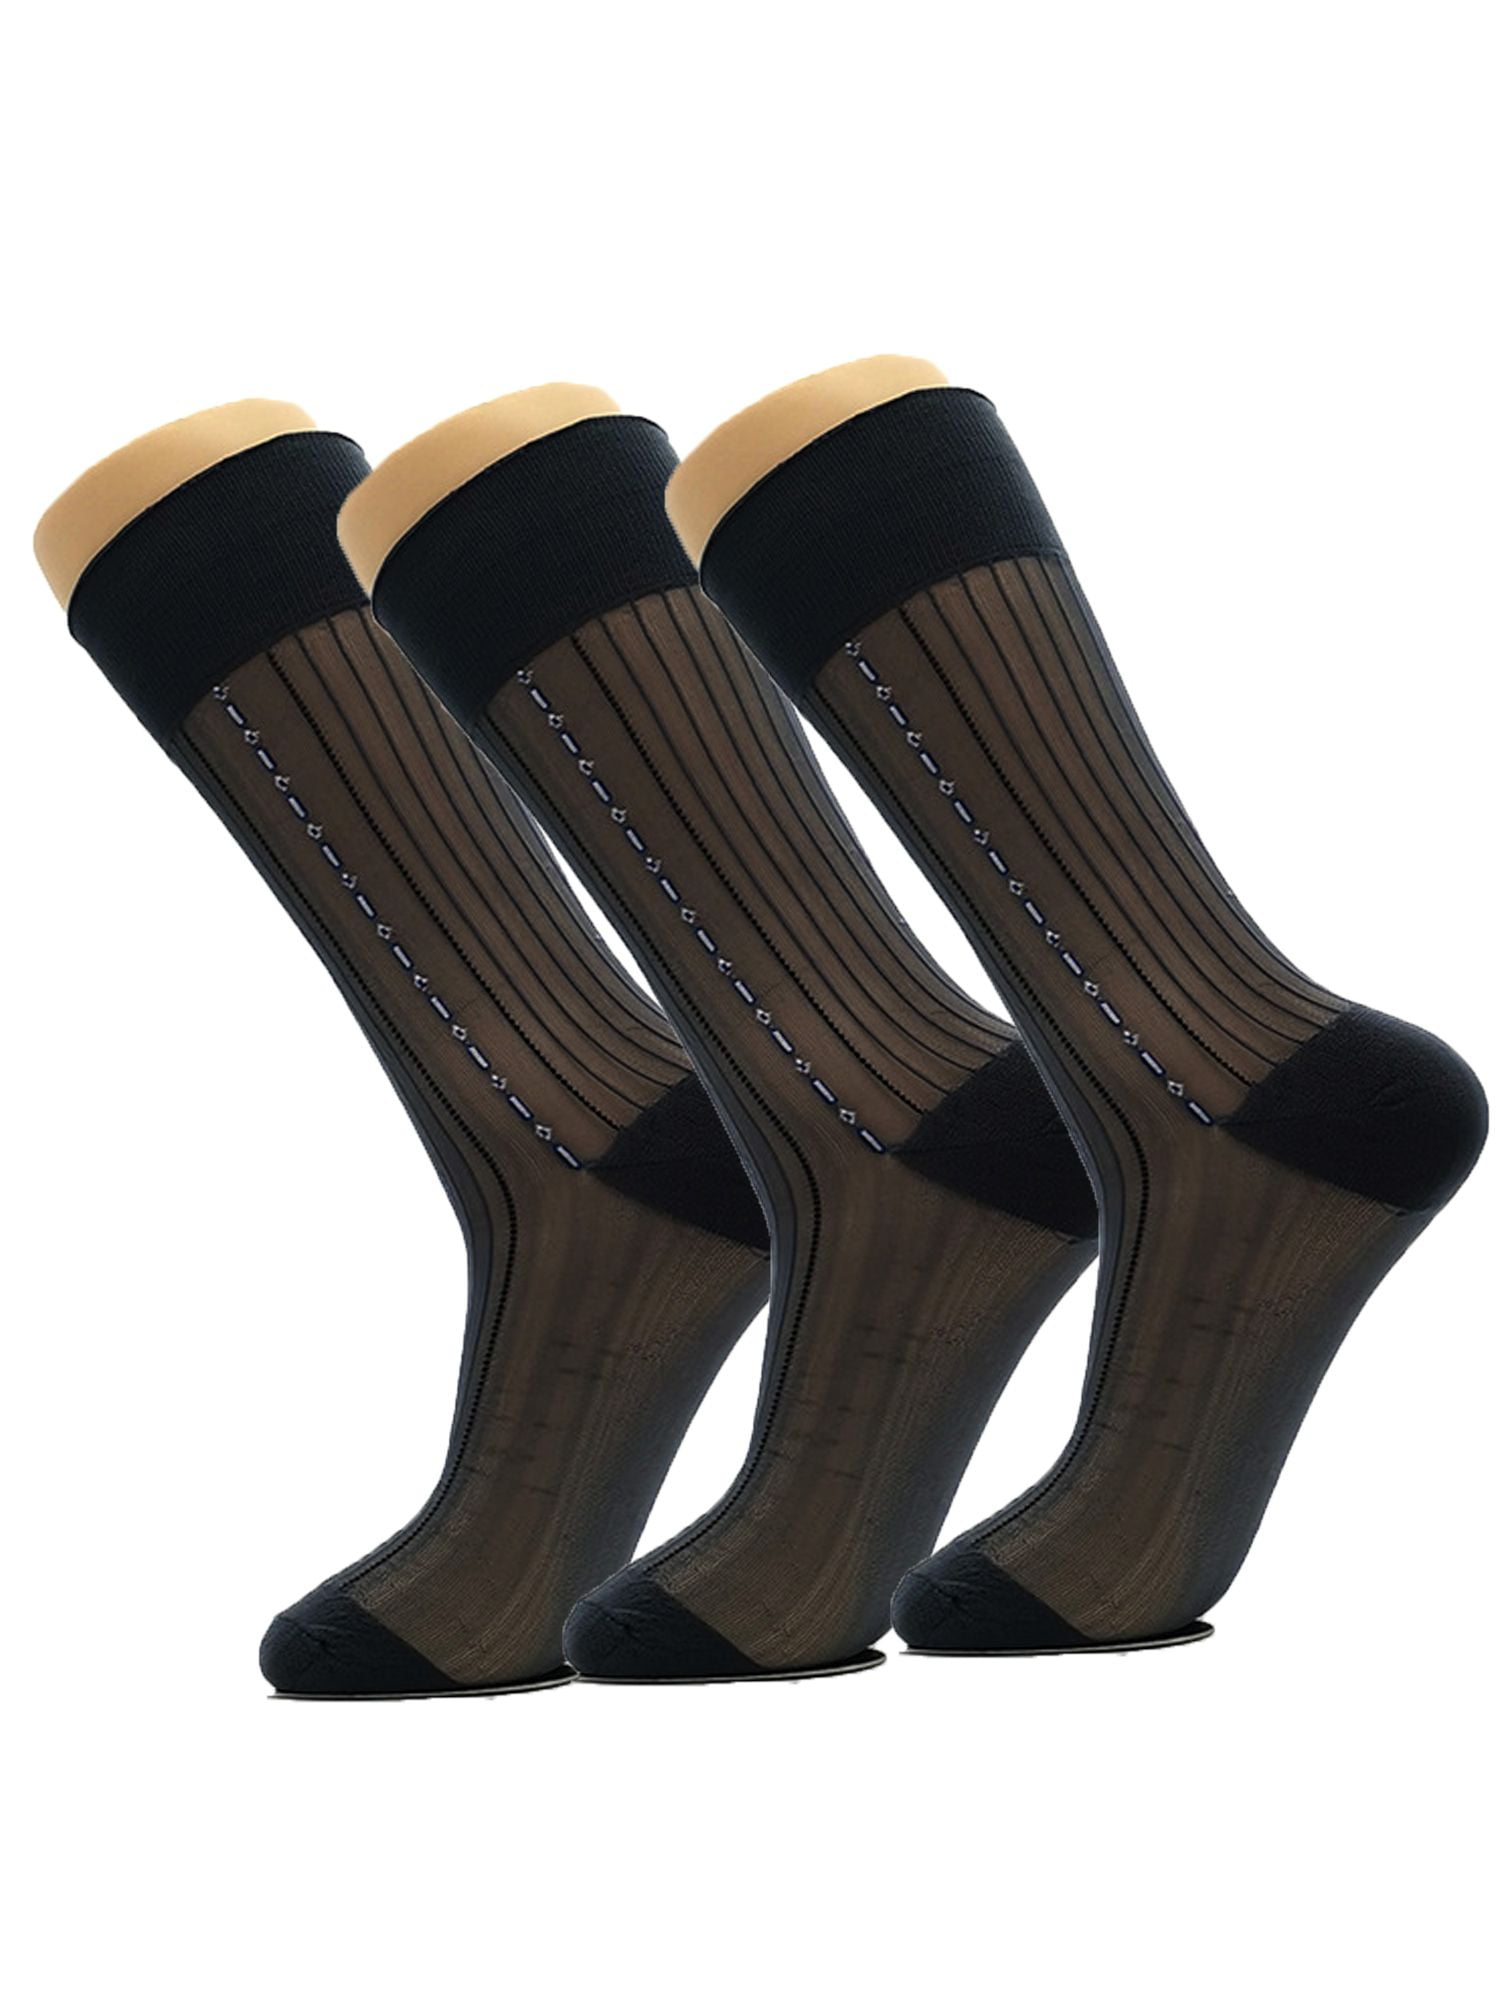 Luxtrada 3 Pairs Mens Silk Socks Sheer Men Dress Socks Ultra Thin Striped  Socks Summer Cool Crew Socks Black 